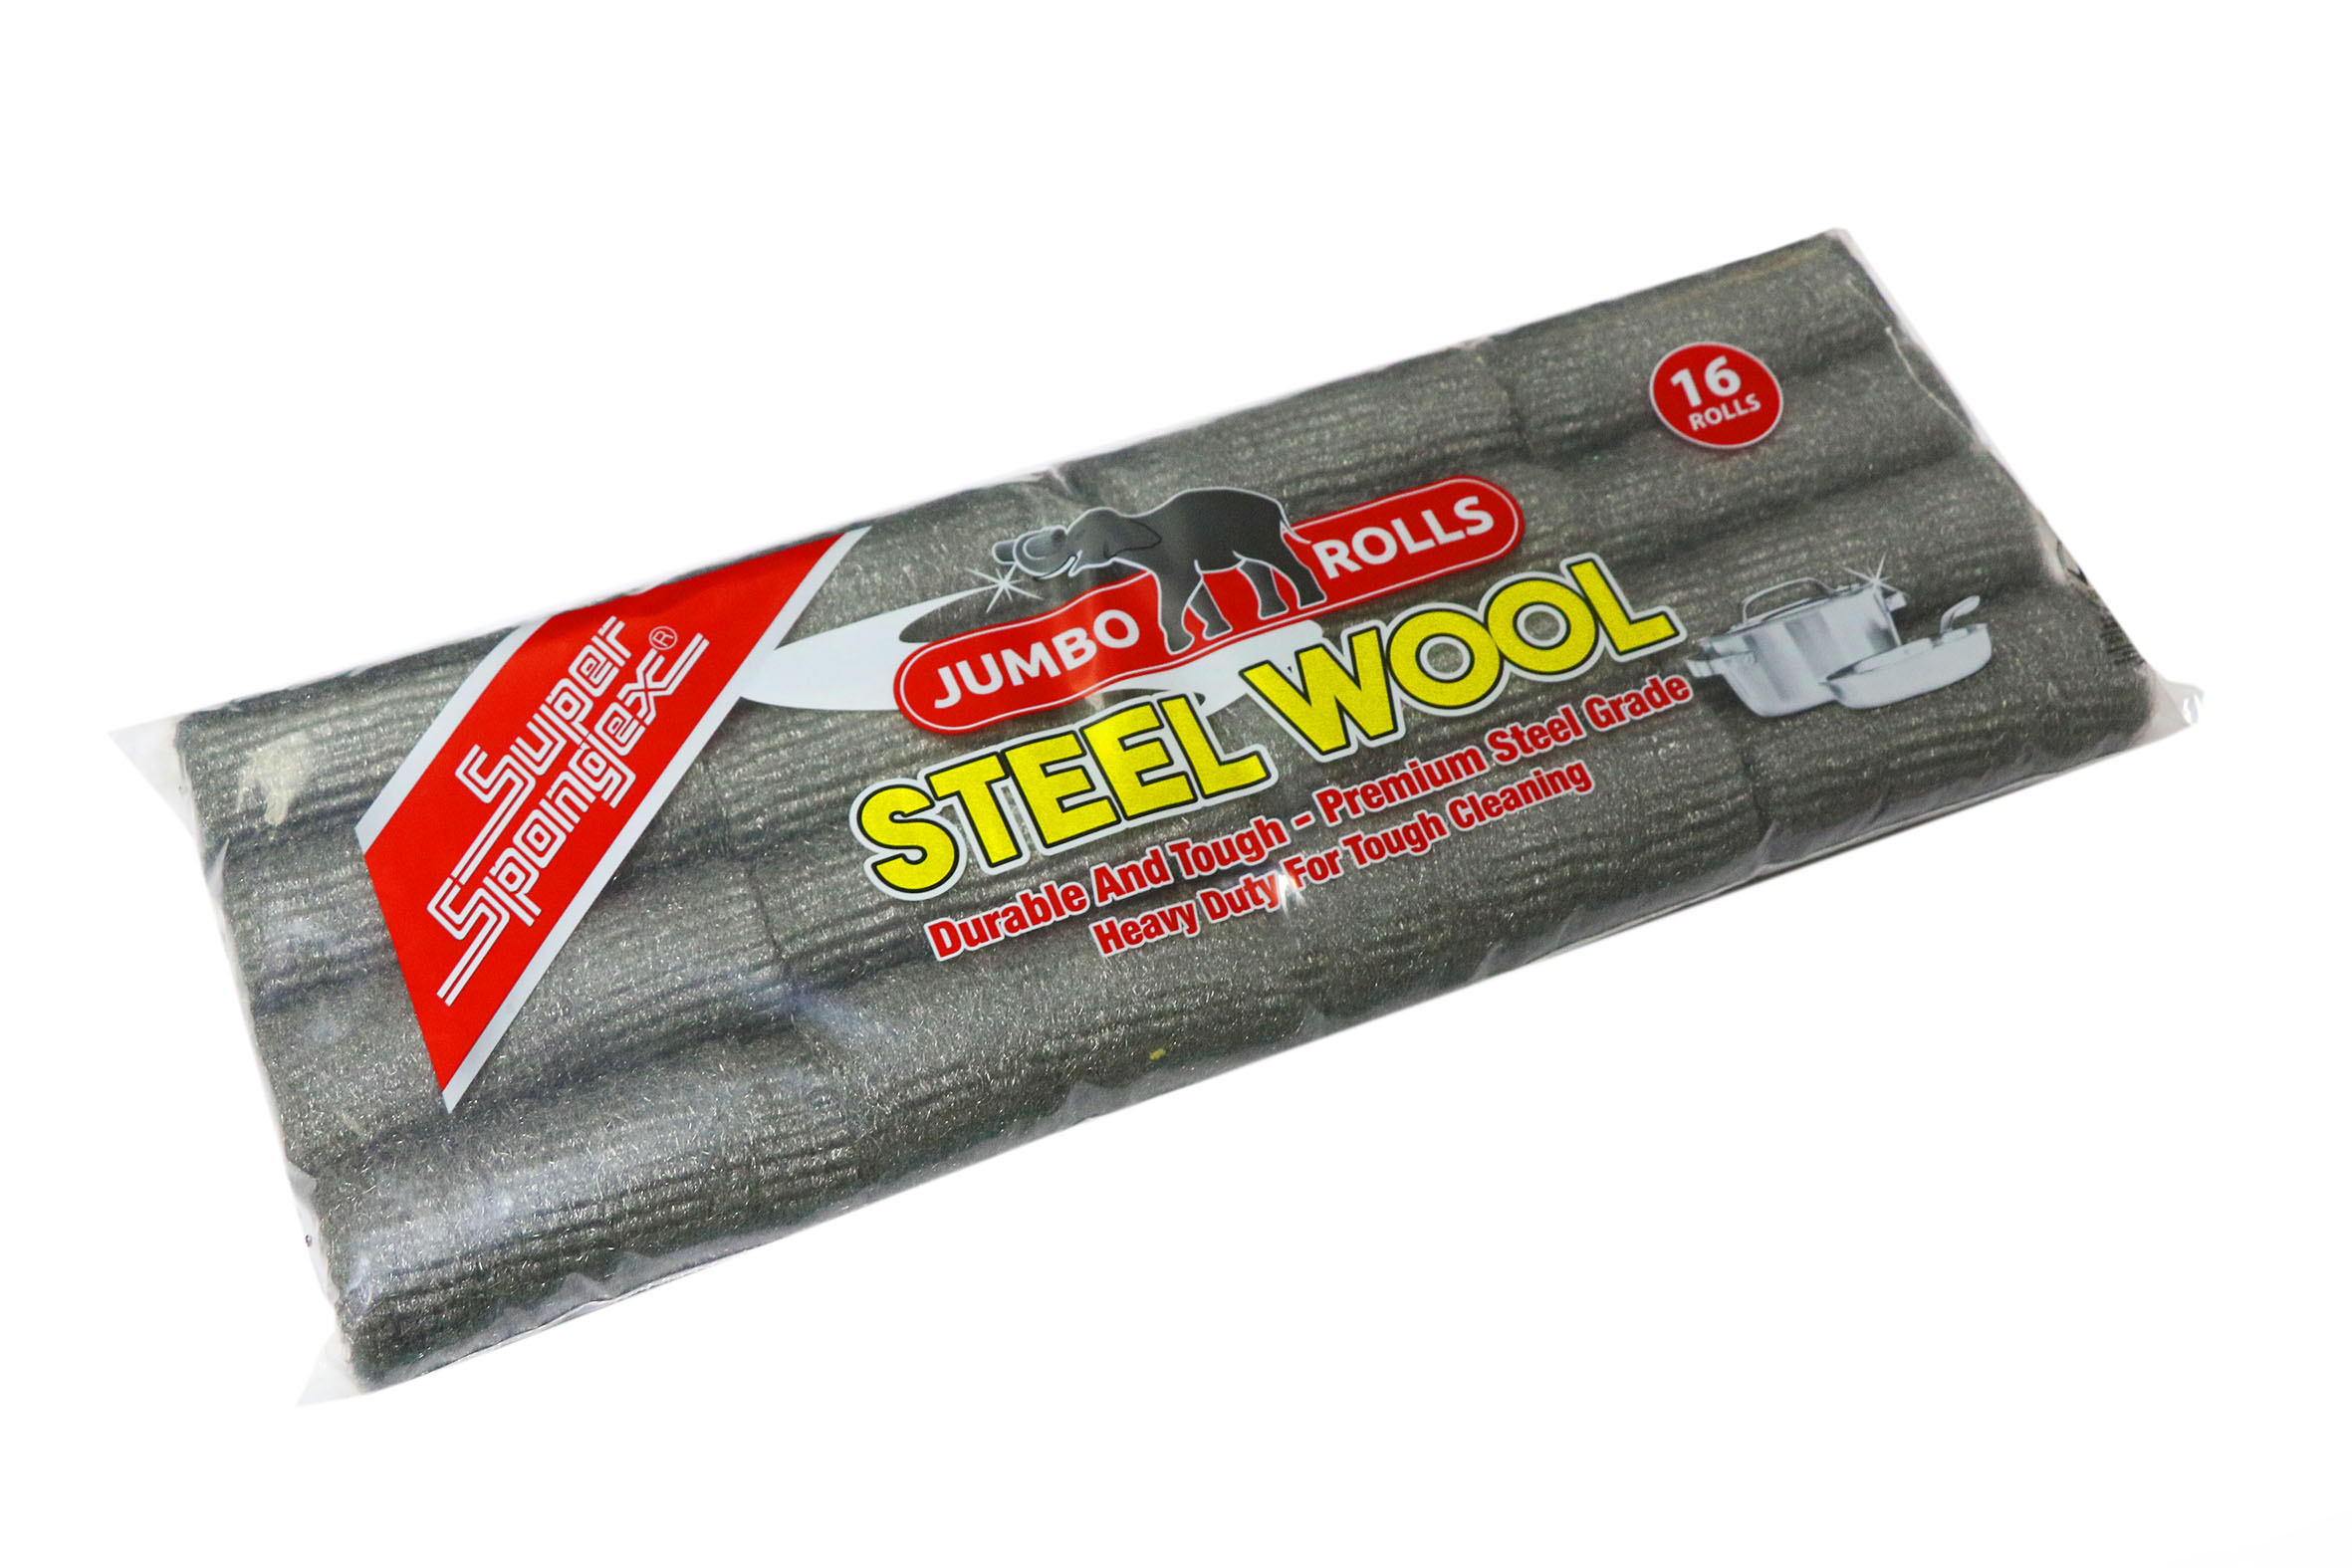 Stainless Steel Wool Jumbo Rolls